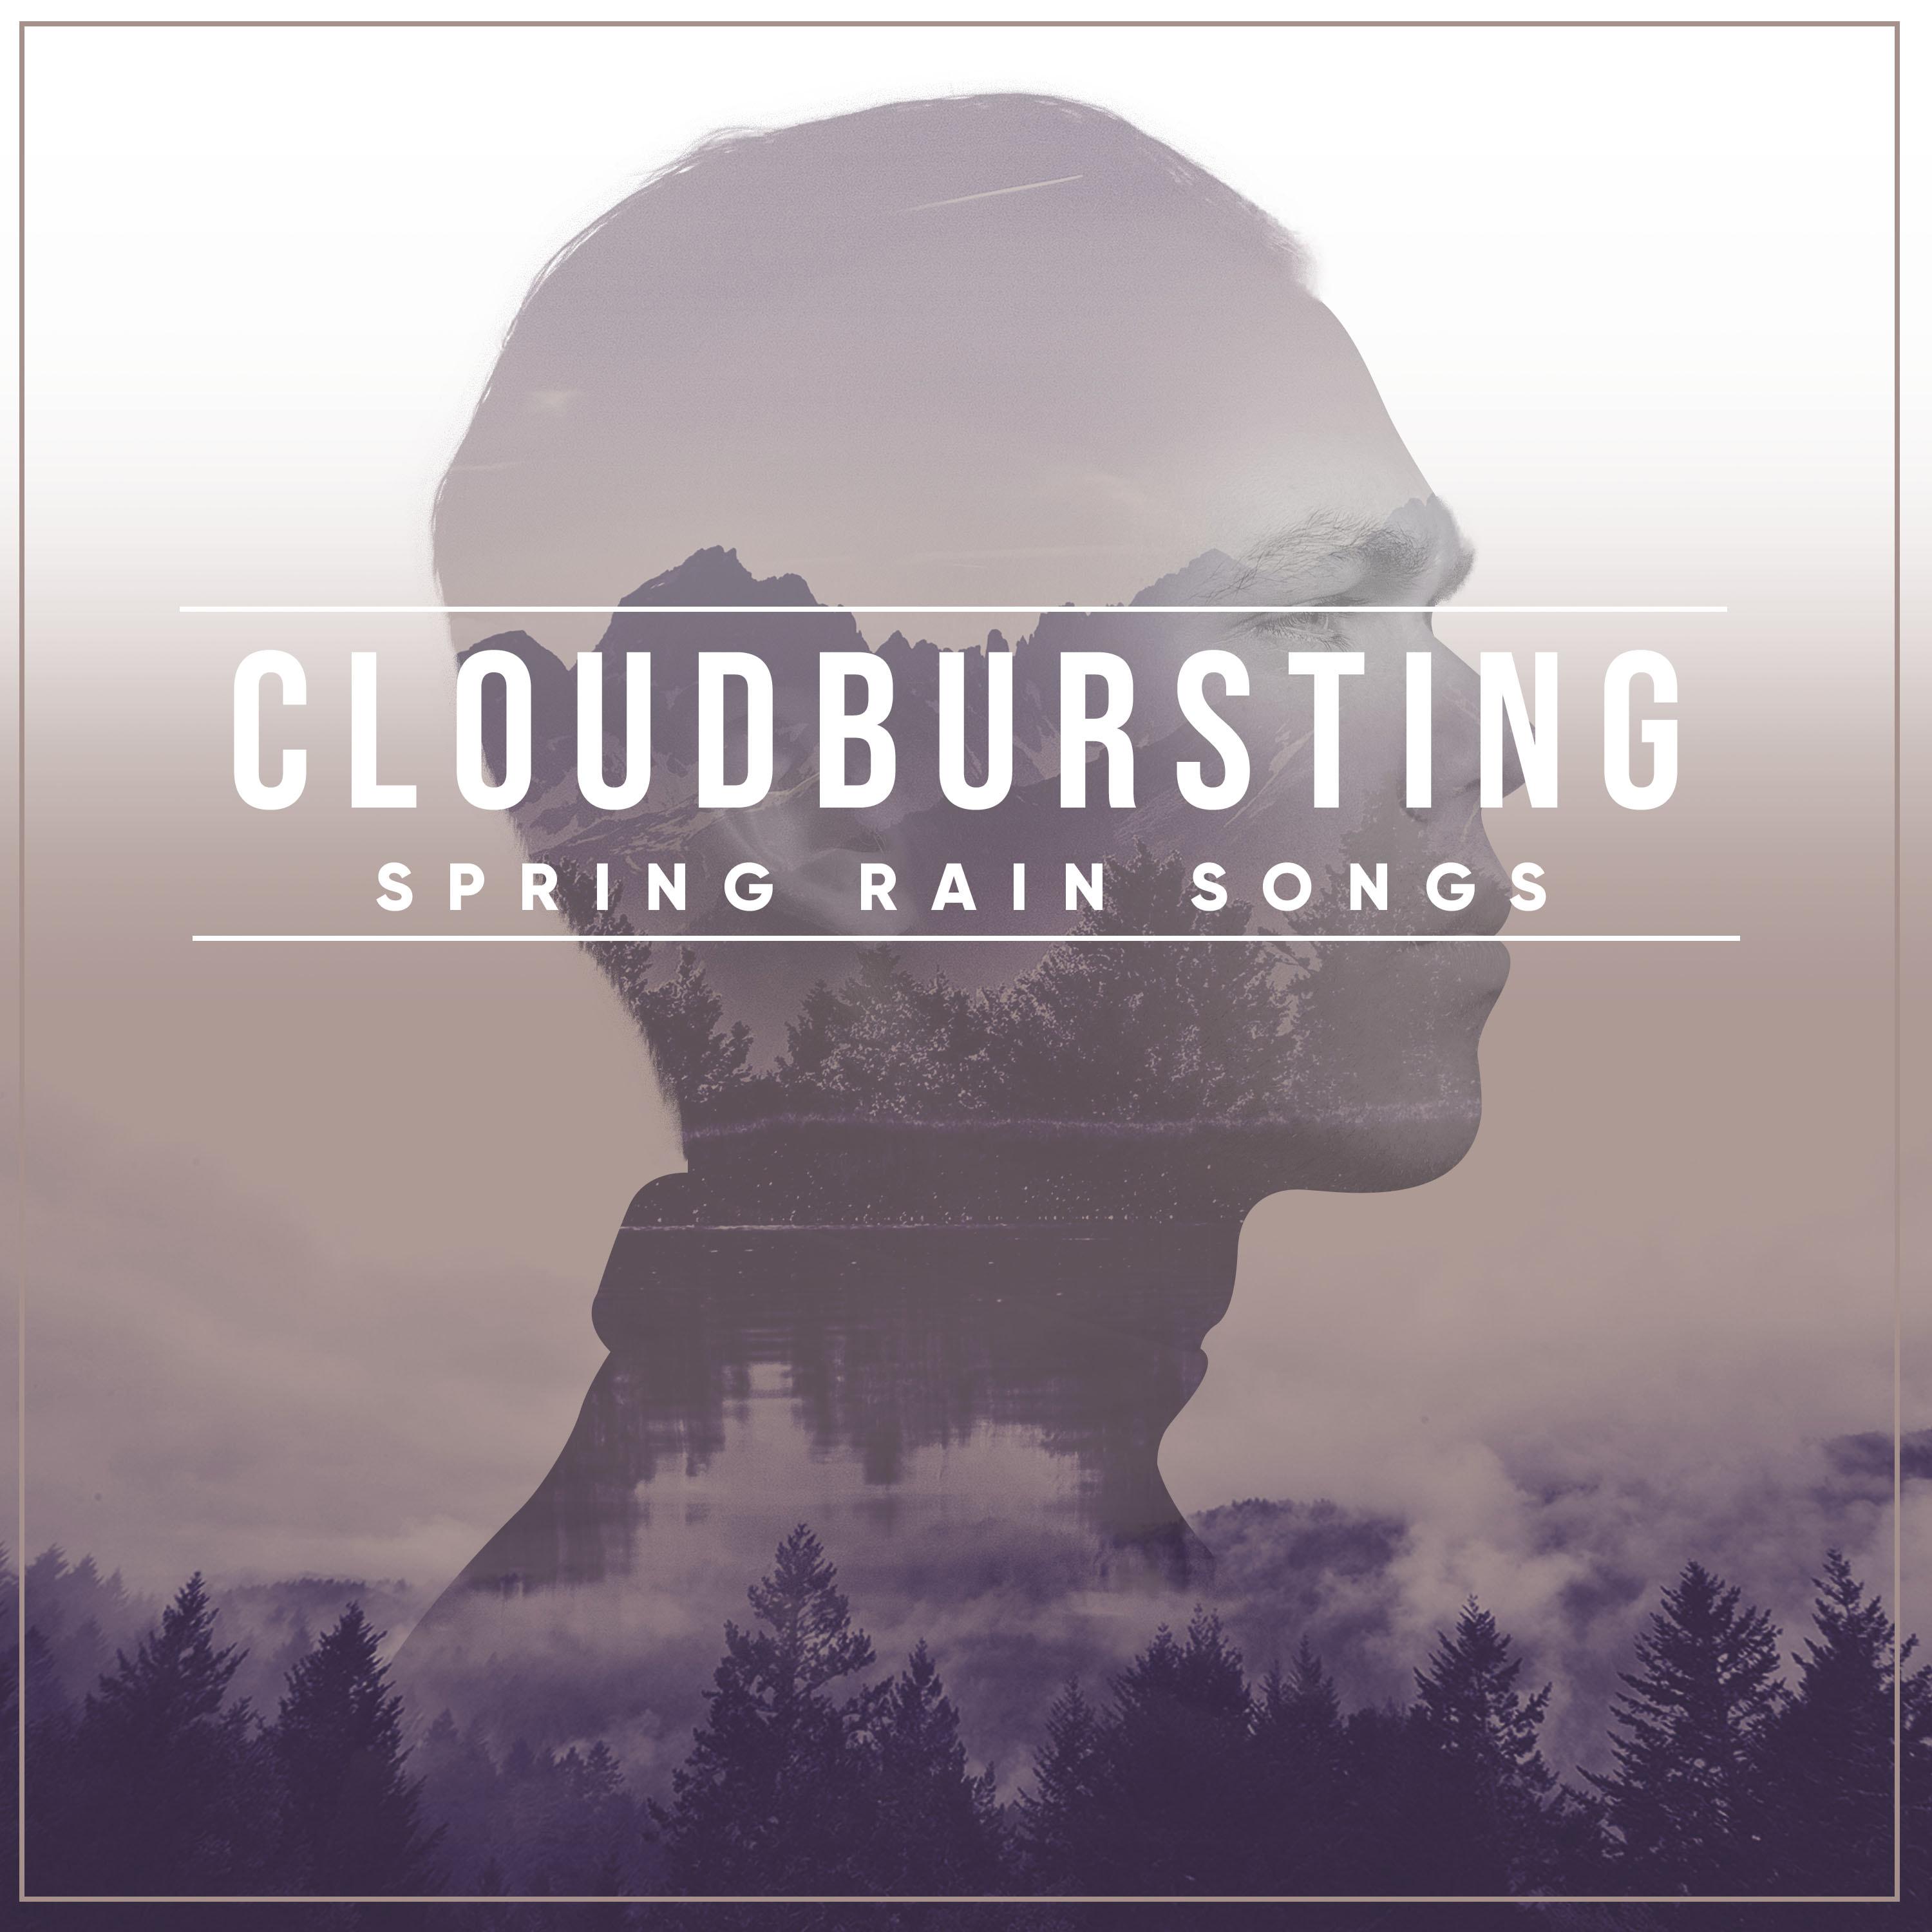 #15 Cloudbursting Spring Rain Songs for Yoga or Spa